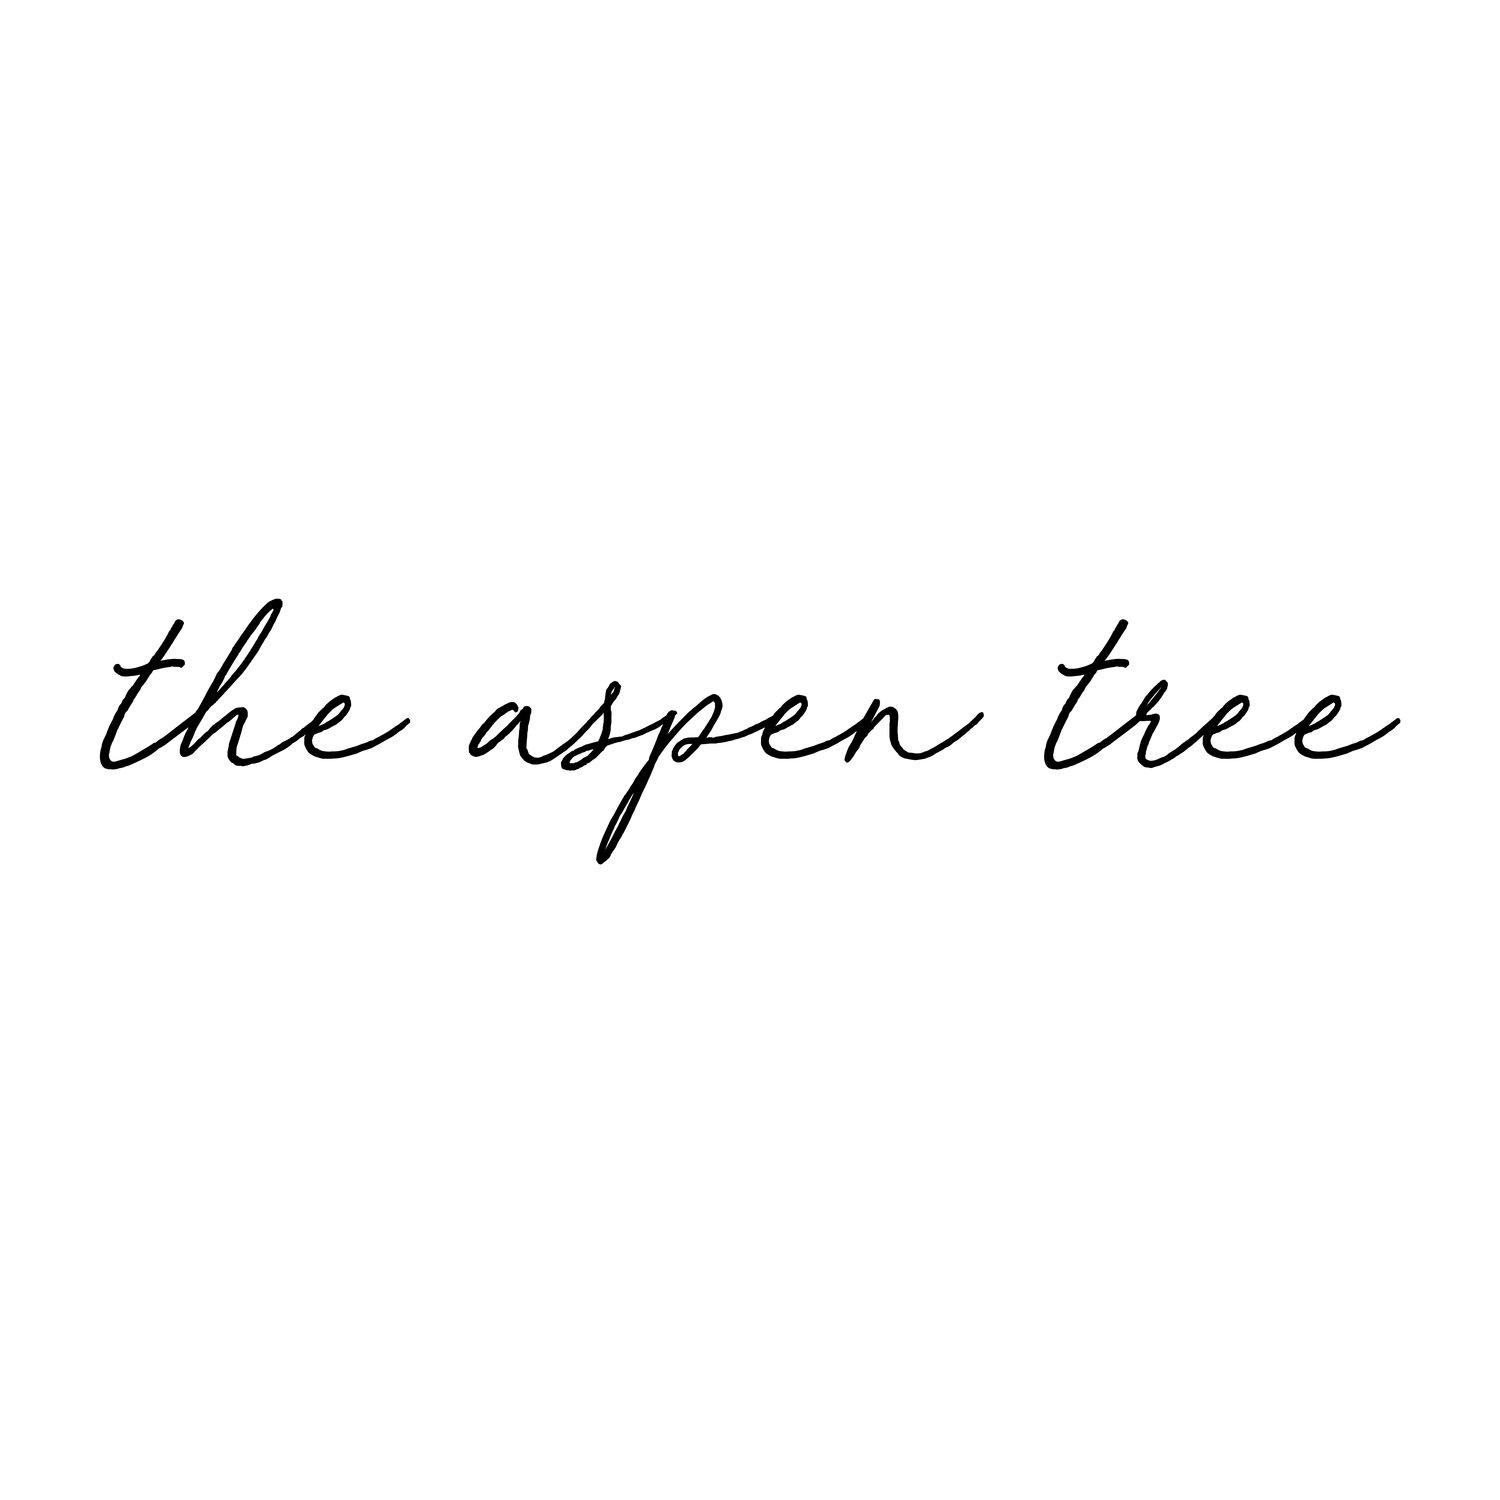 the aspen tree